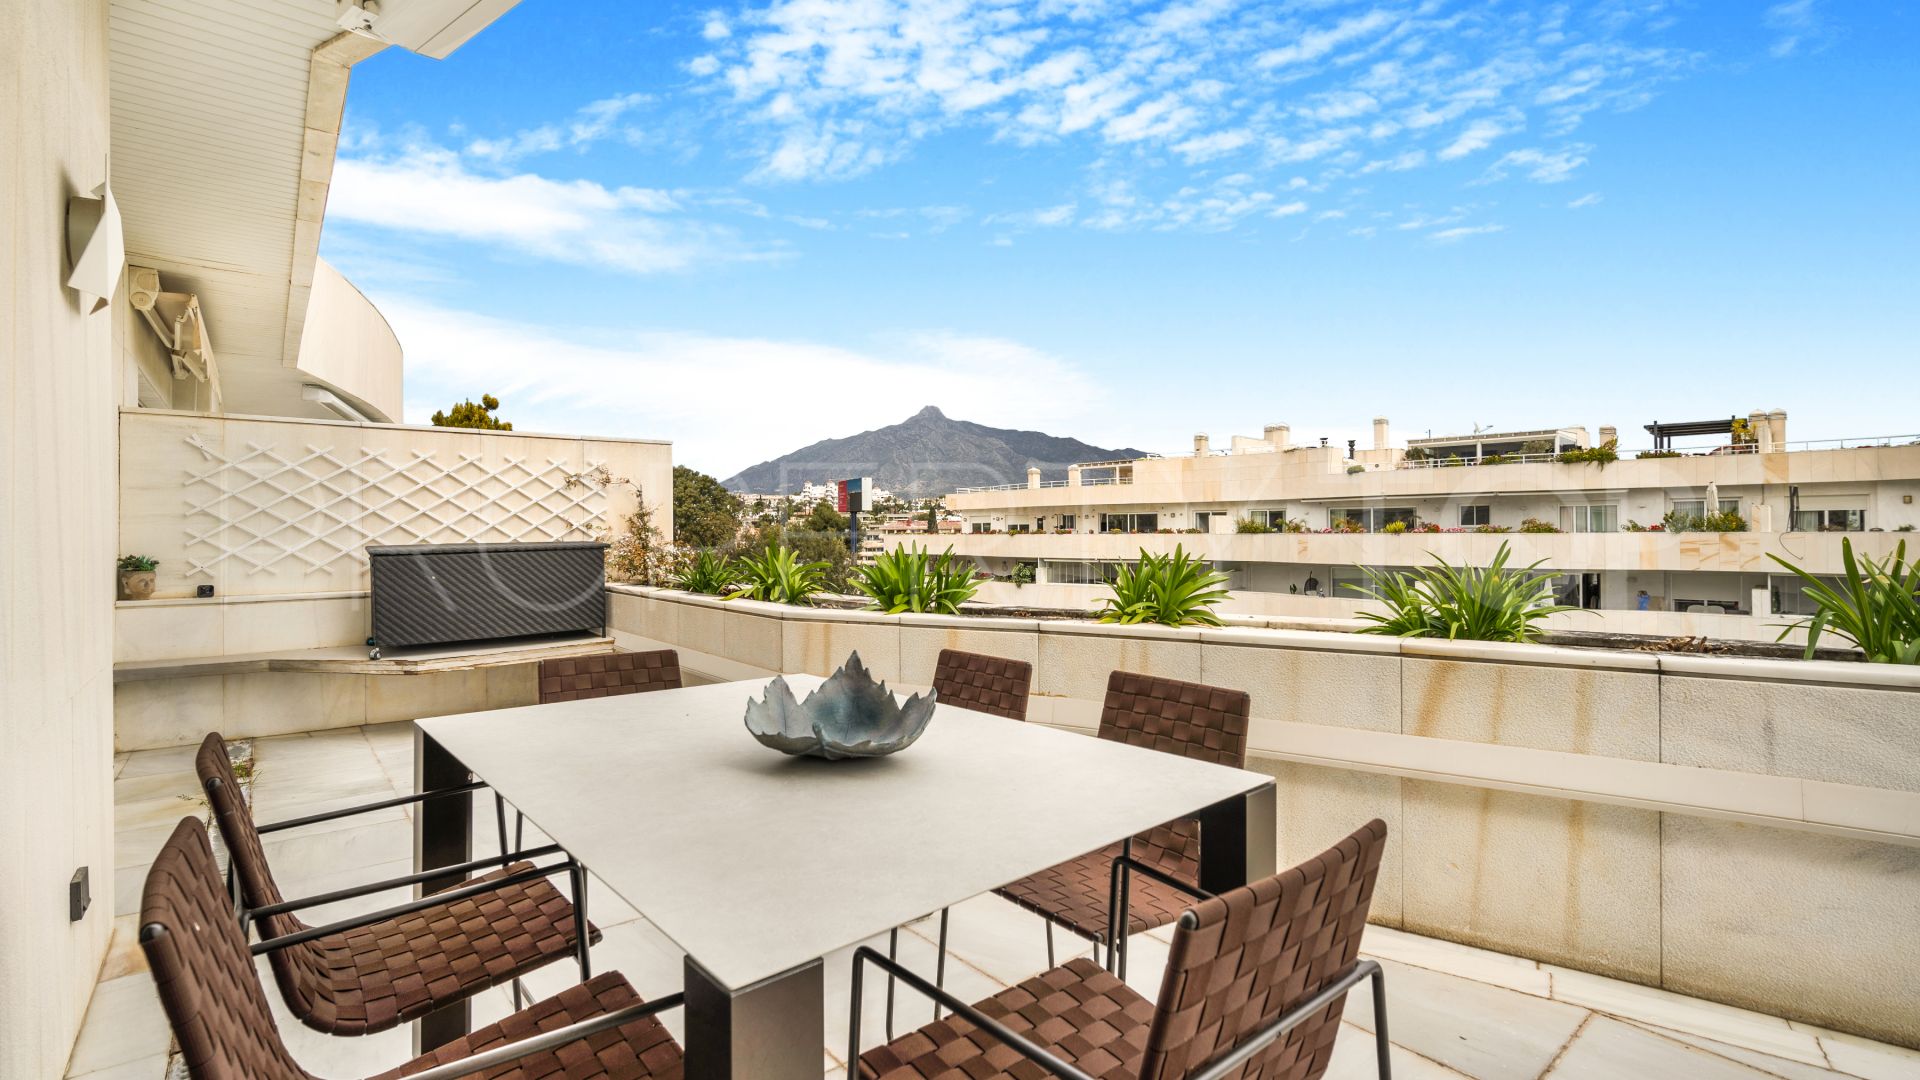 4 bedrooms Marbella - Puerto Banus duplex penthouse for sale